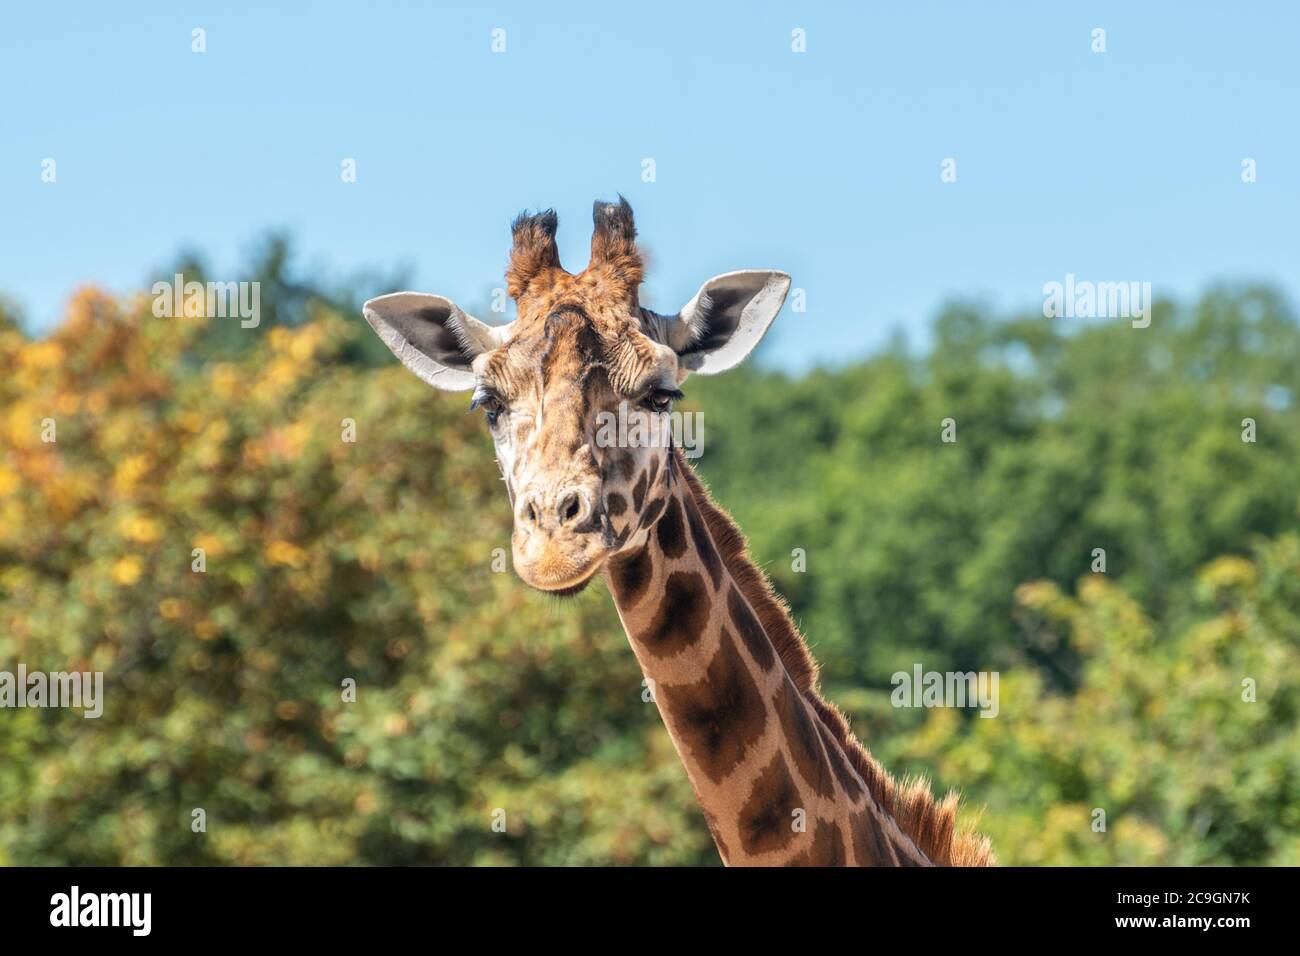 Rothschild's giraffe (Giraffa camelopardalis rothschildi) at Marwell Zoo, UK Stock Photo